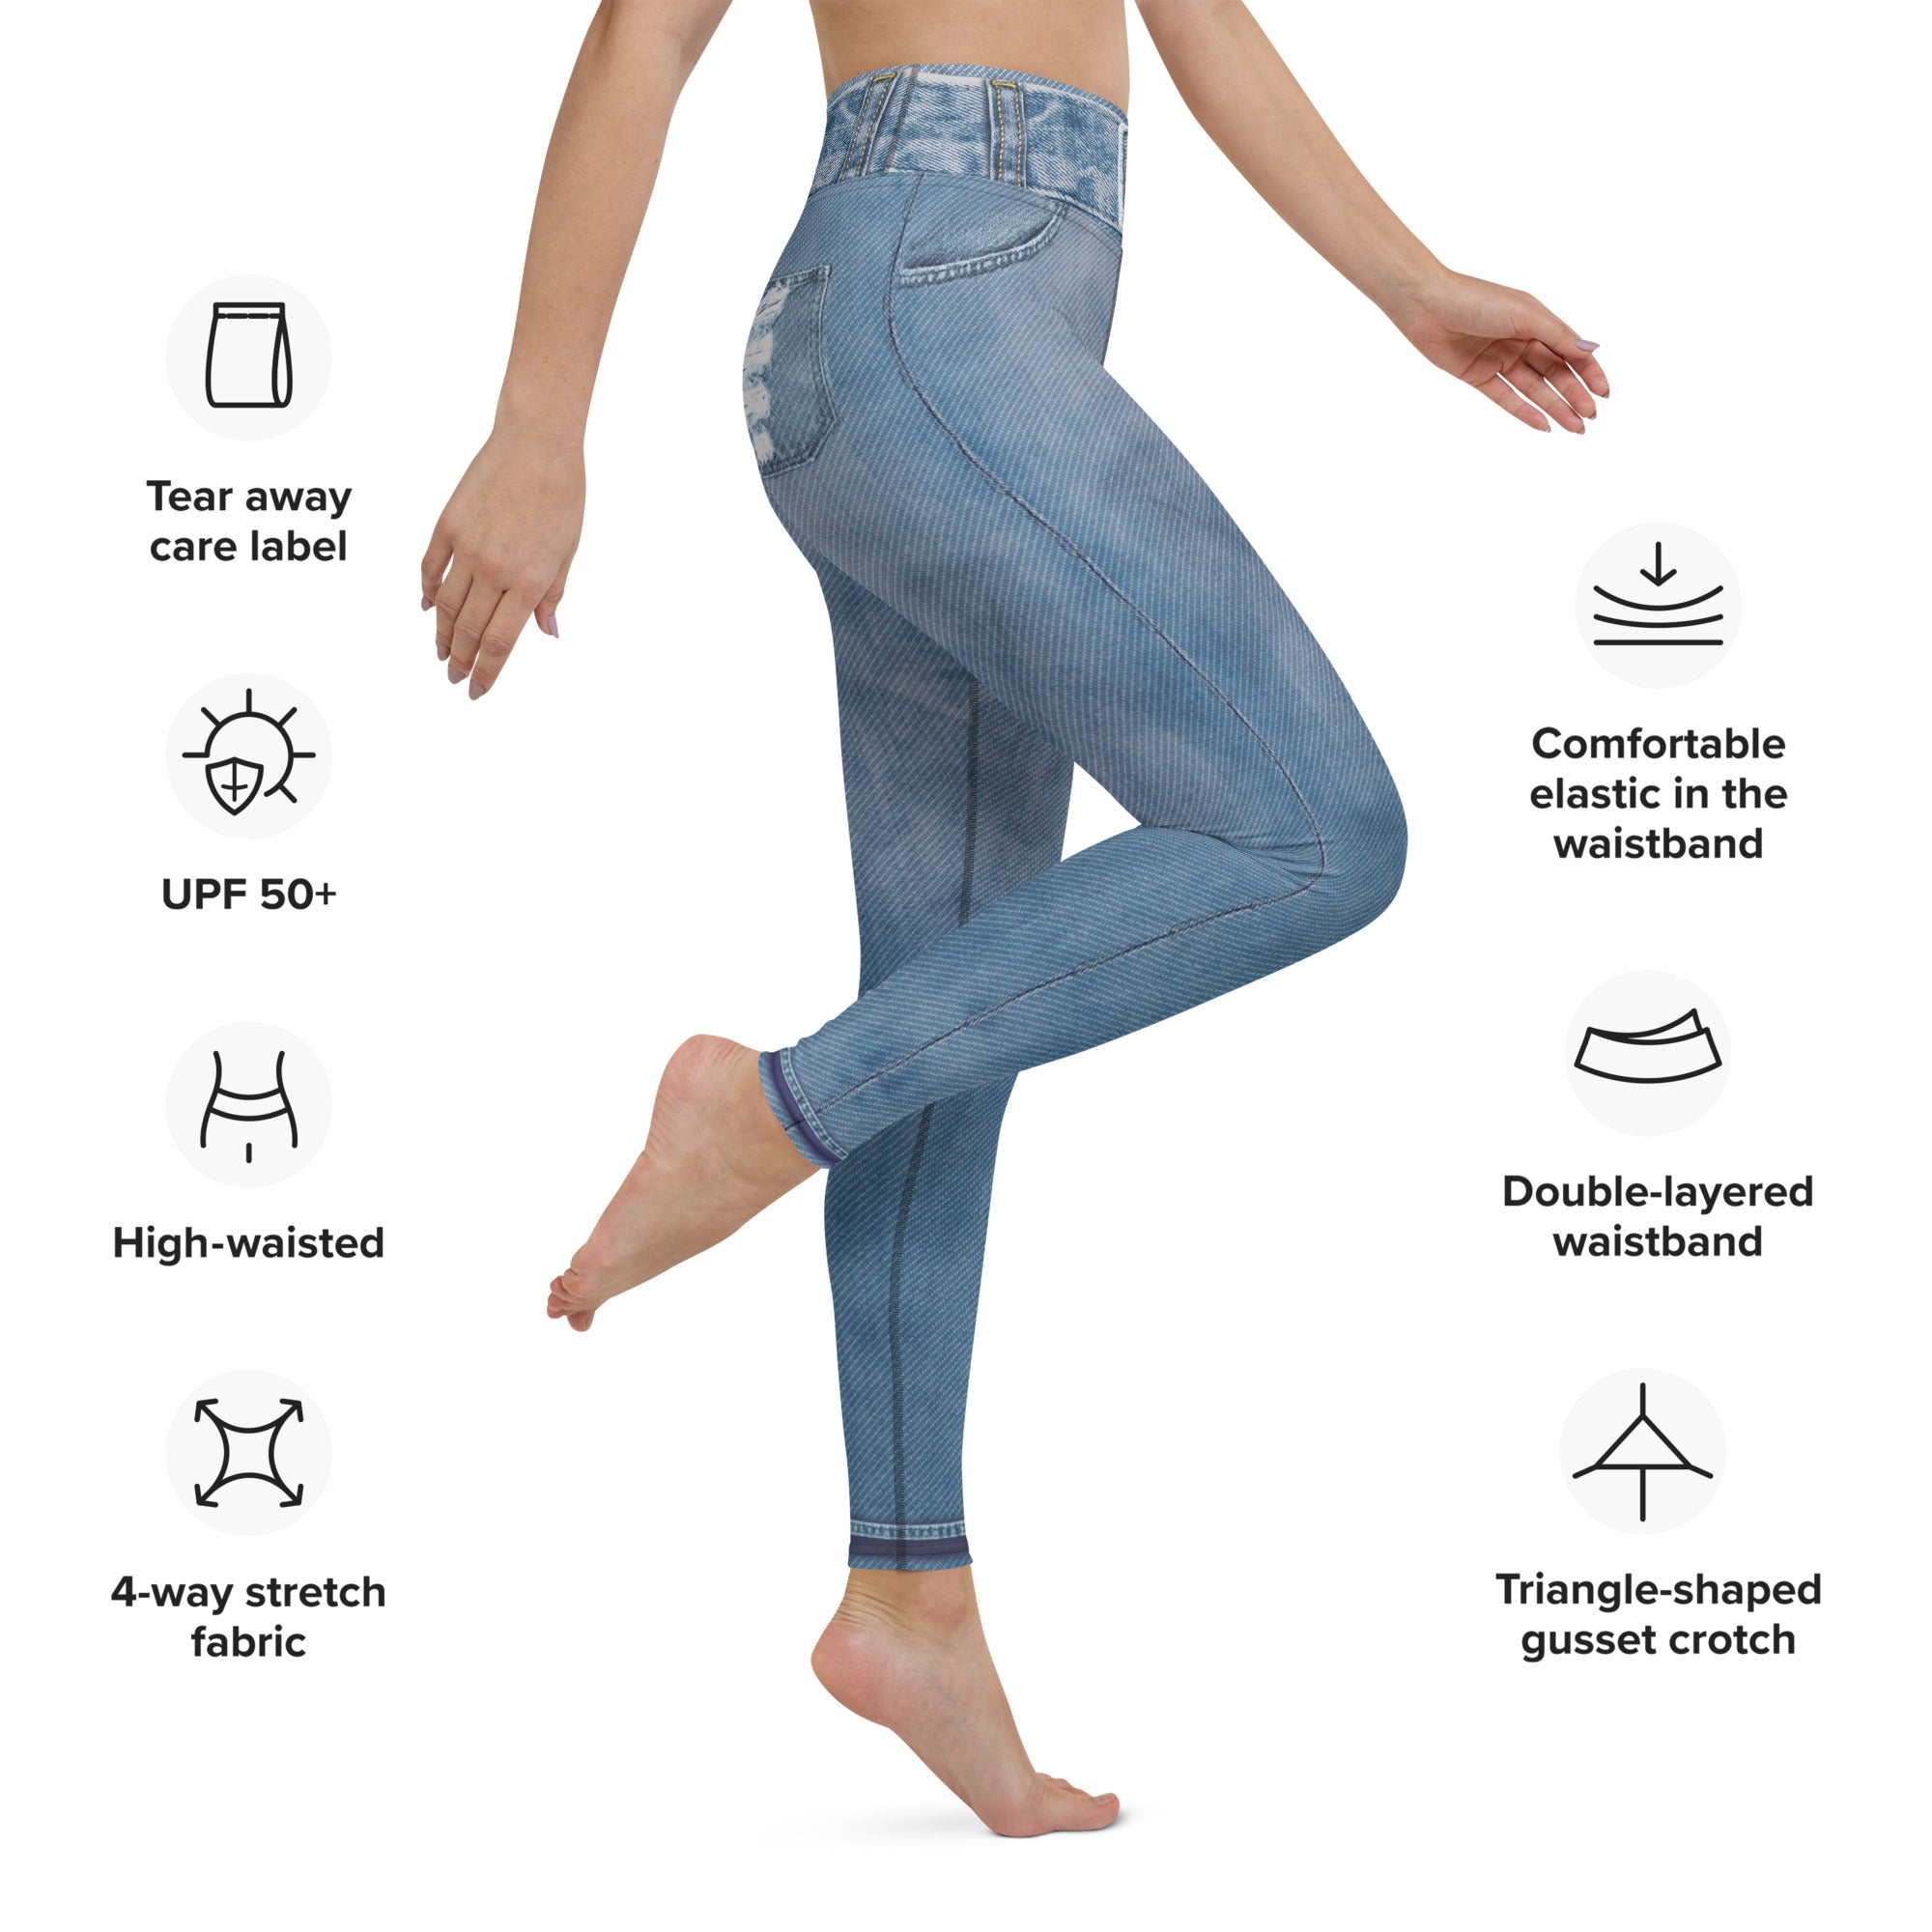 Denim Jeans Yoga Leggings